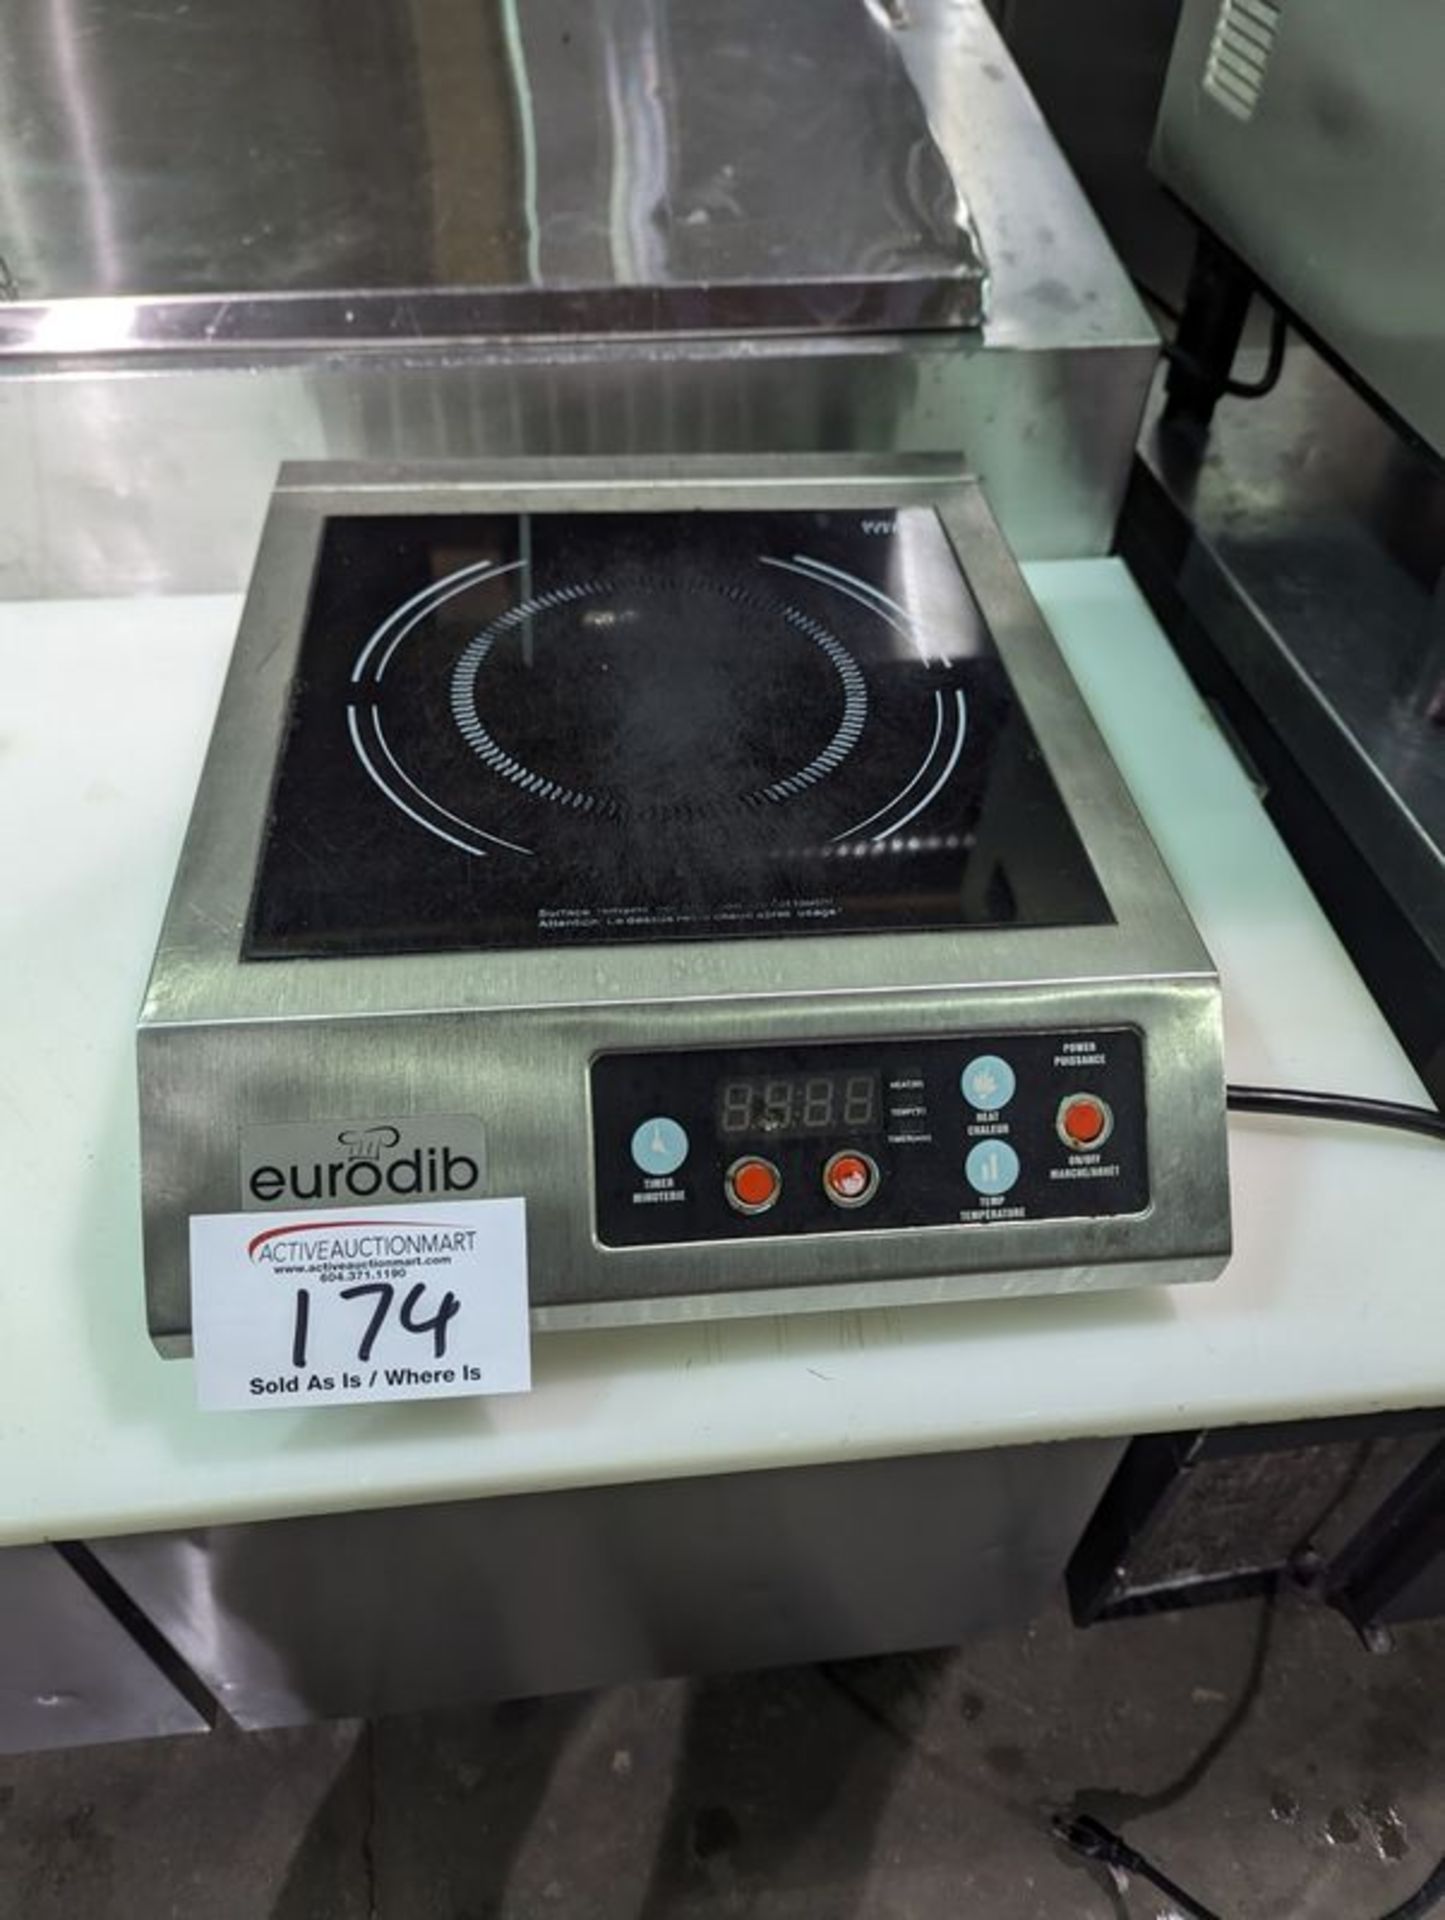 Eurodib Induction Cooker